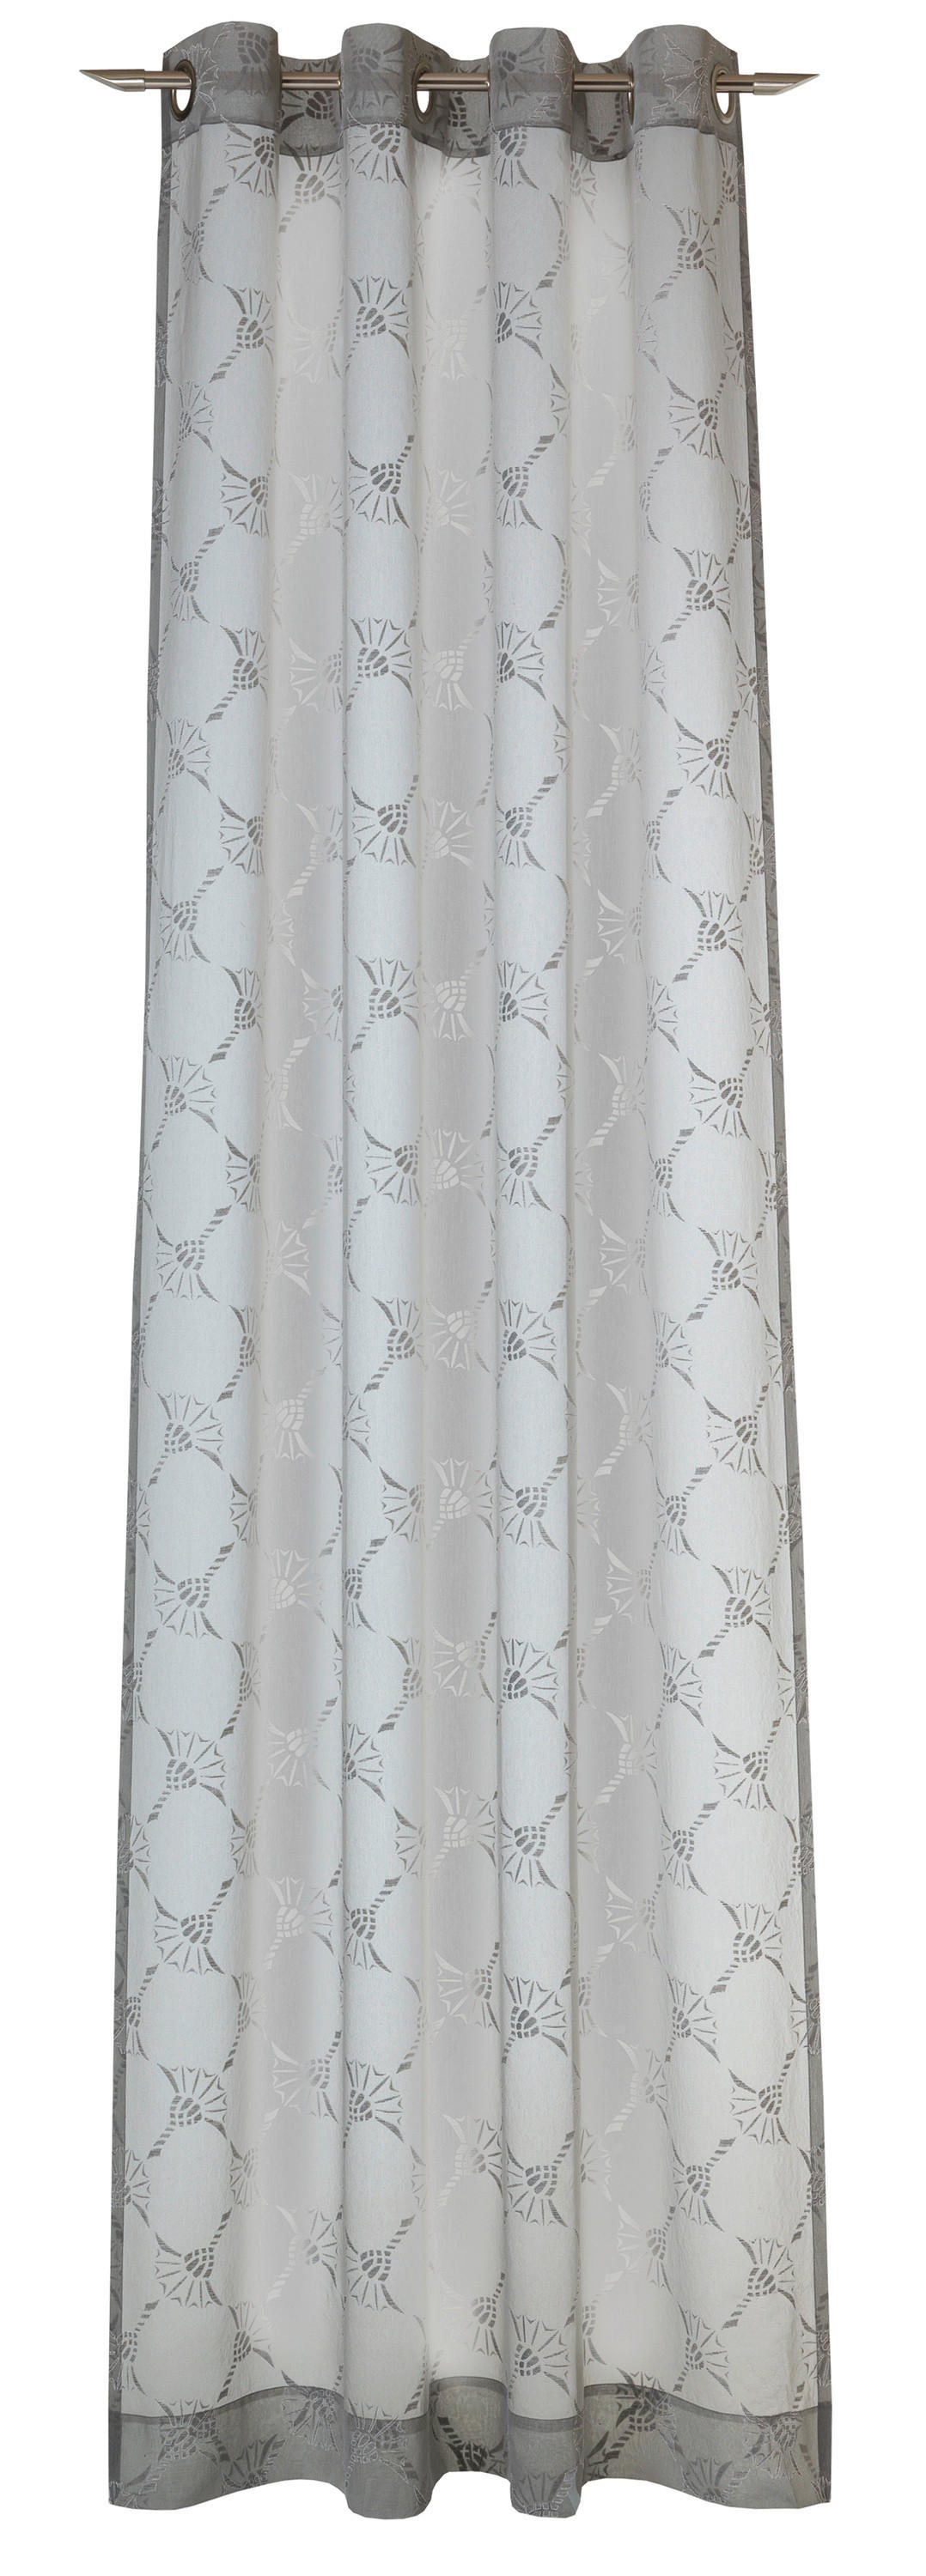 ÖSENSCHAL Airy transparent 140/250 cm   - Hellgrau/Grau, Design, Textil (140/250cm) - Joop!